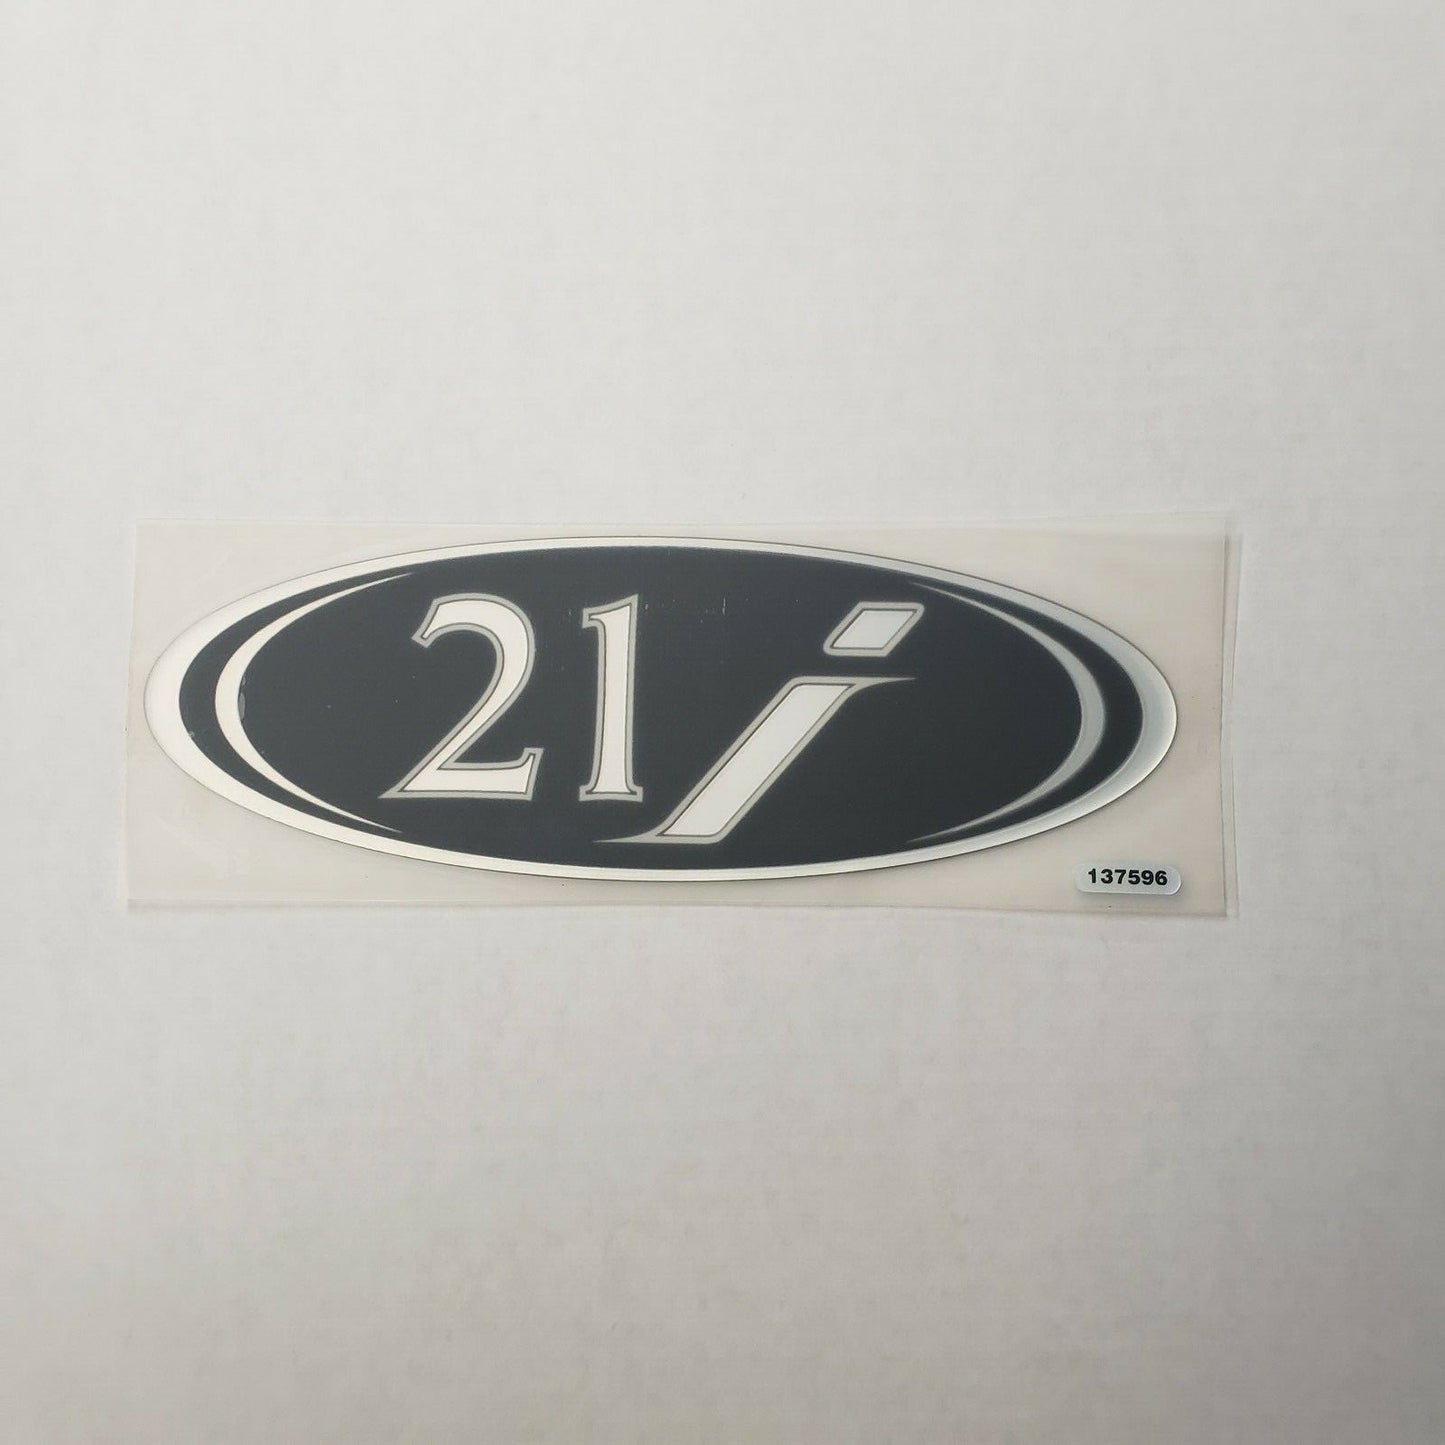 New Authentic Skeeter 21i Emblem Black 8 1/2" X 2 7/8" 21i